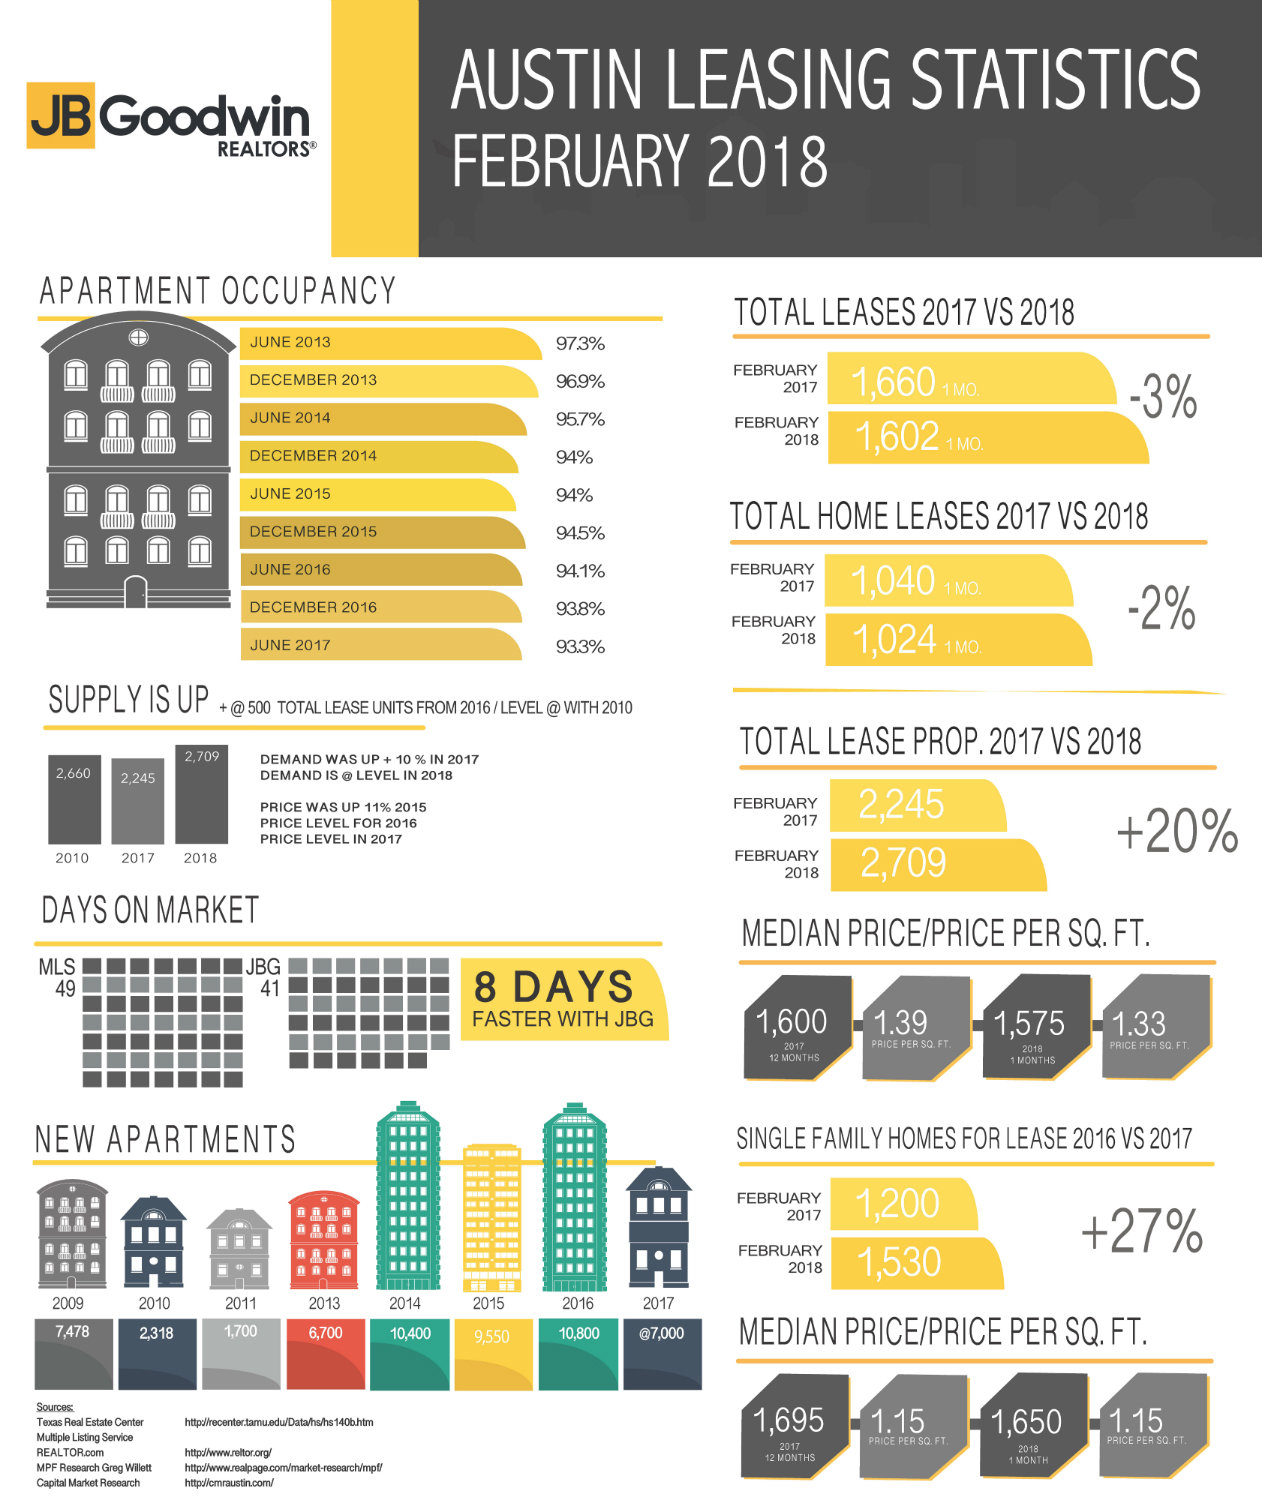 Austin leasing statistics February 2018